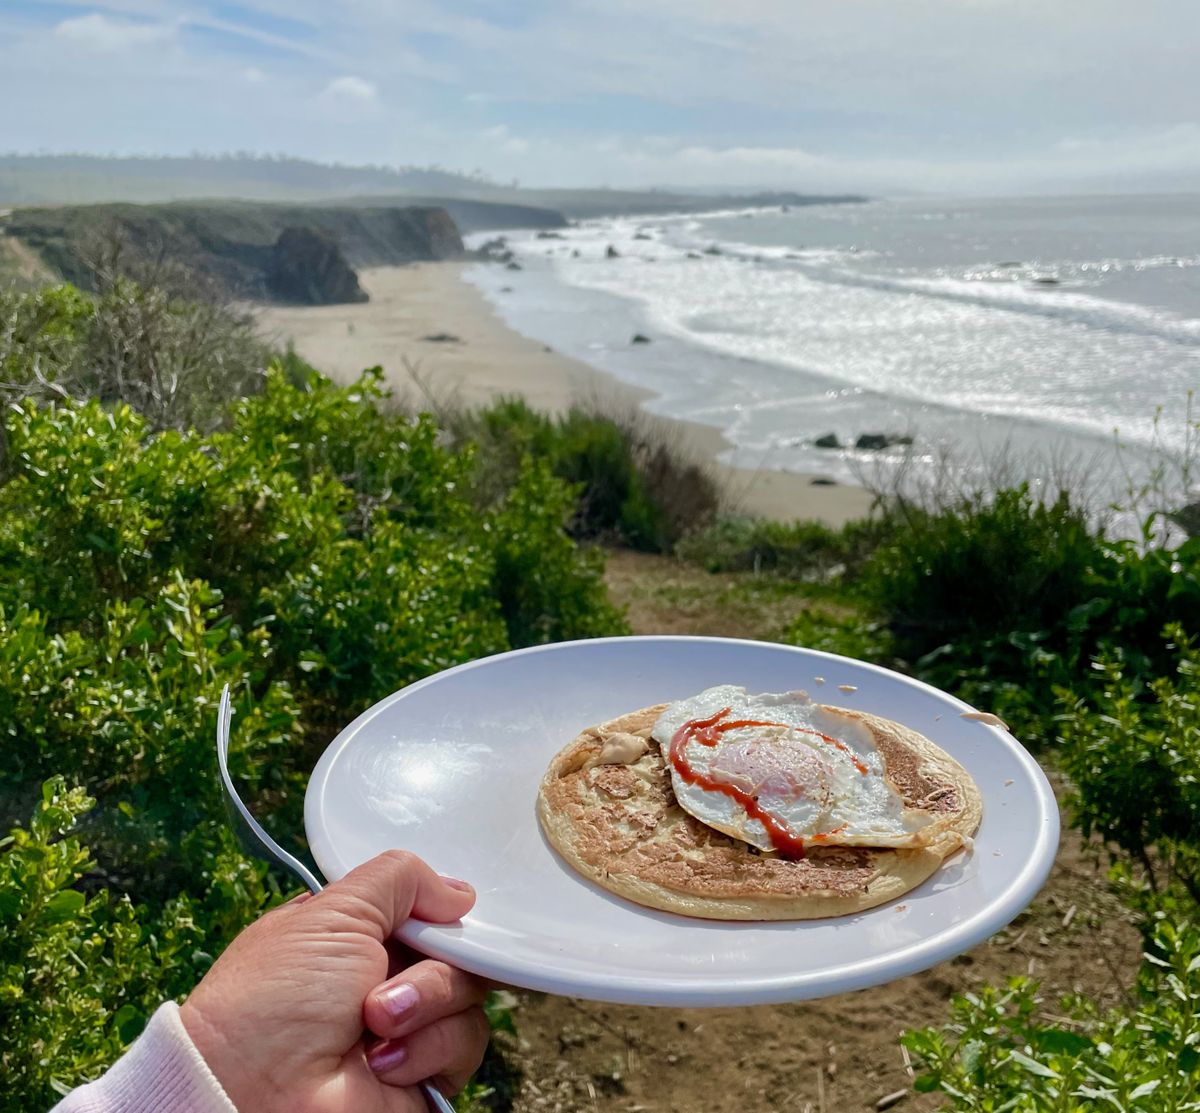 A pancake and egg breakfast overlooking the coastline near Big Sur, Calif. (Leslie Kelly)